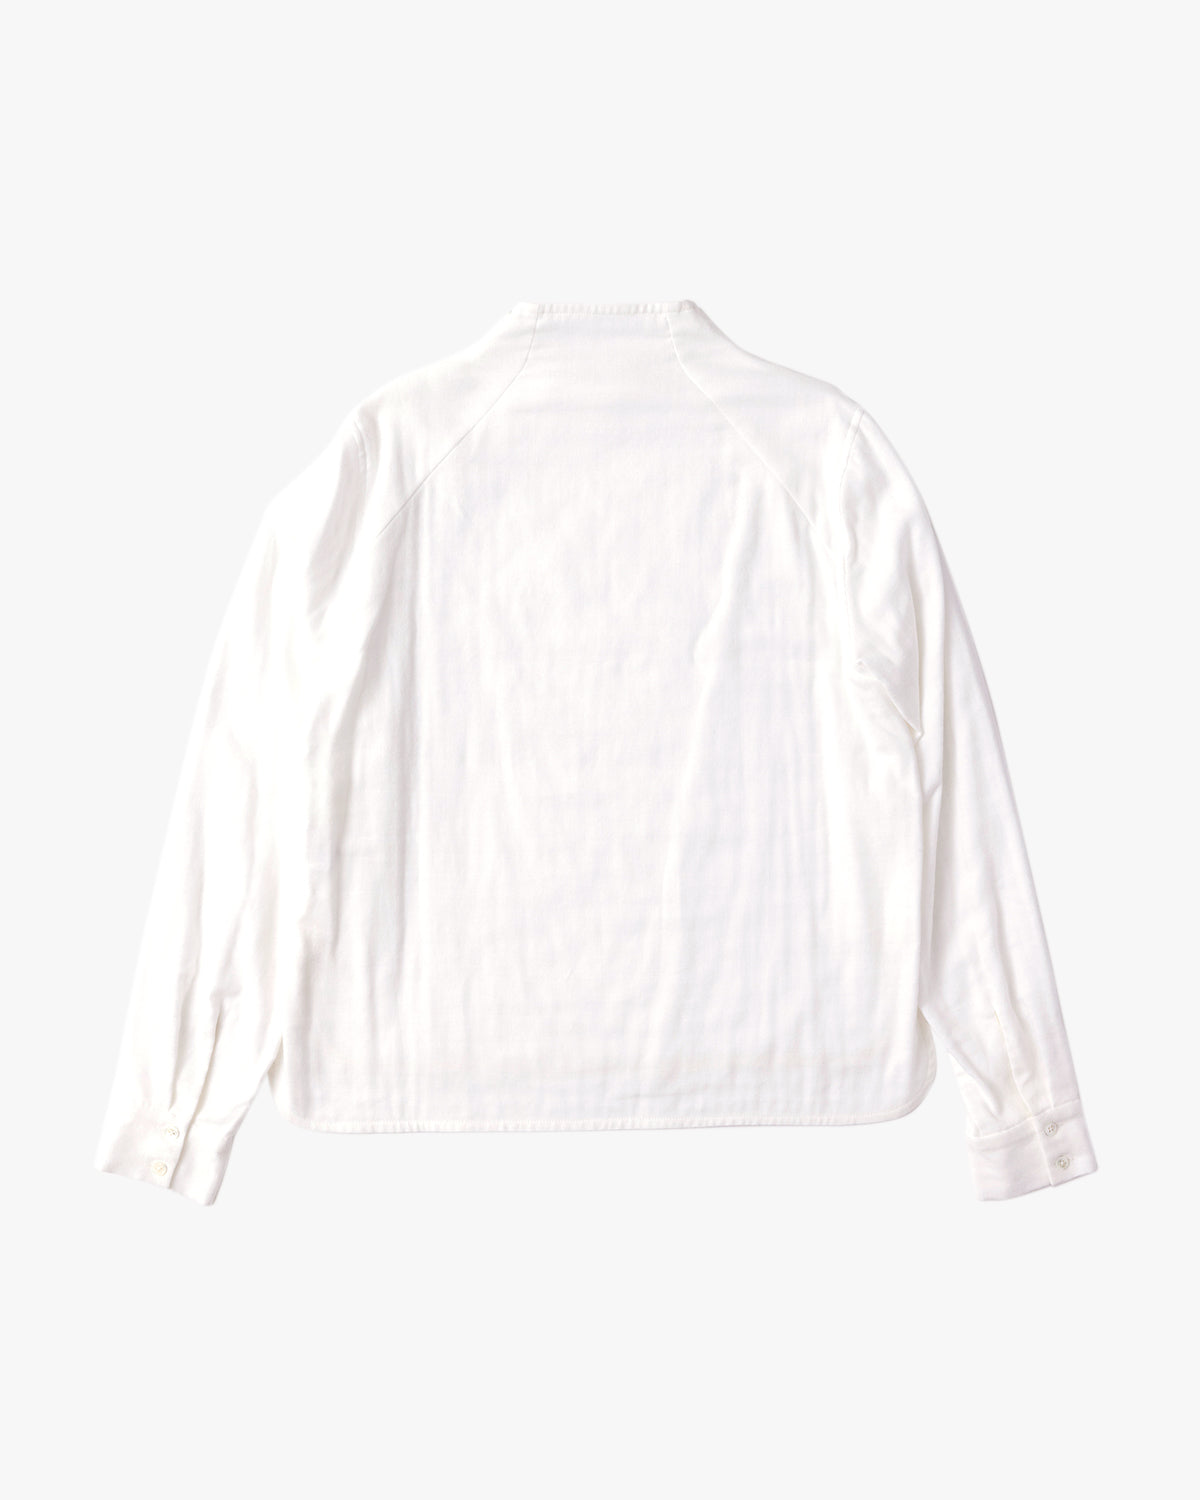 cotton gauze shirts / white